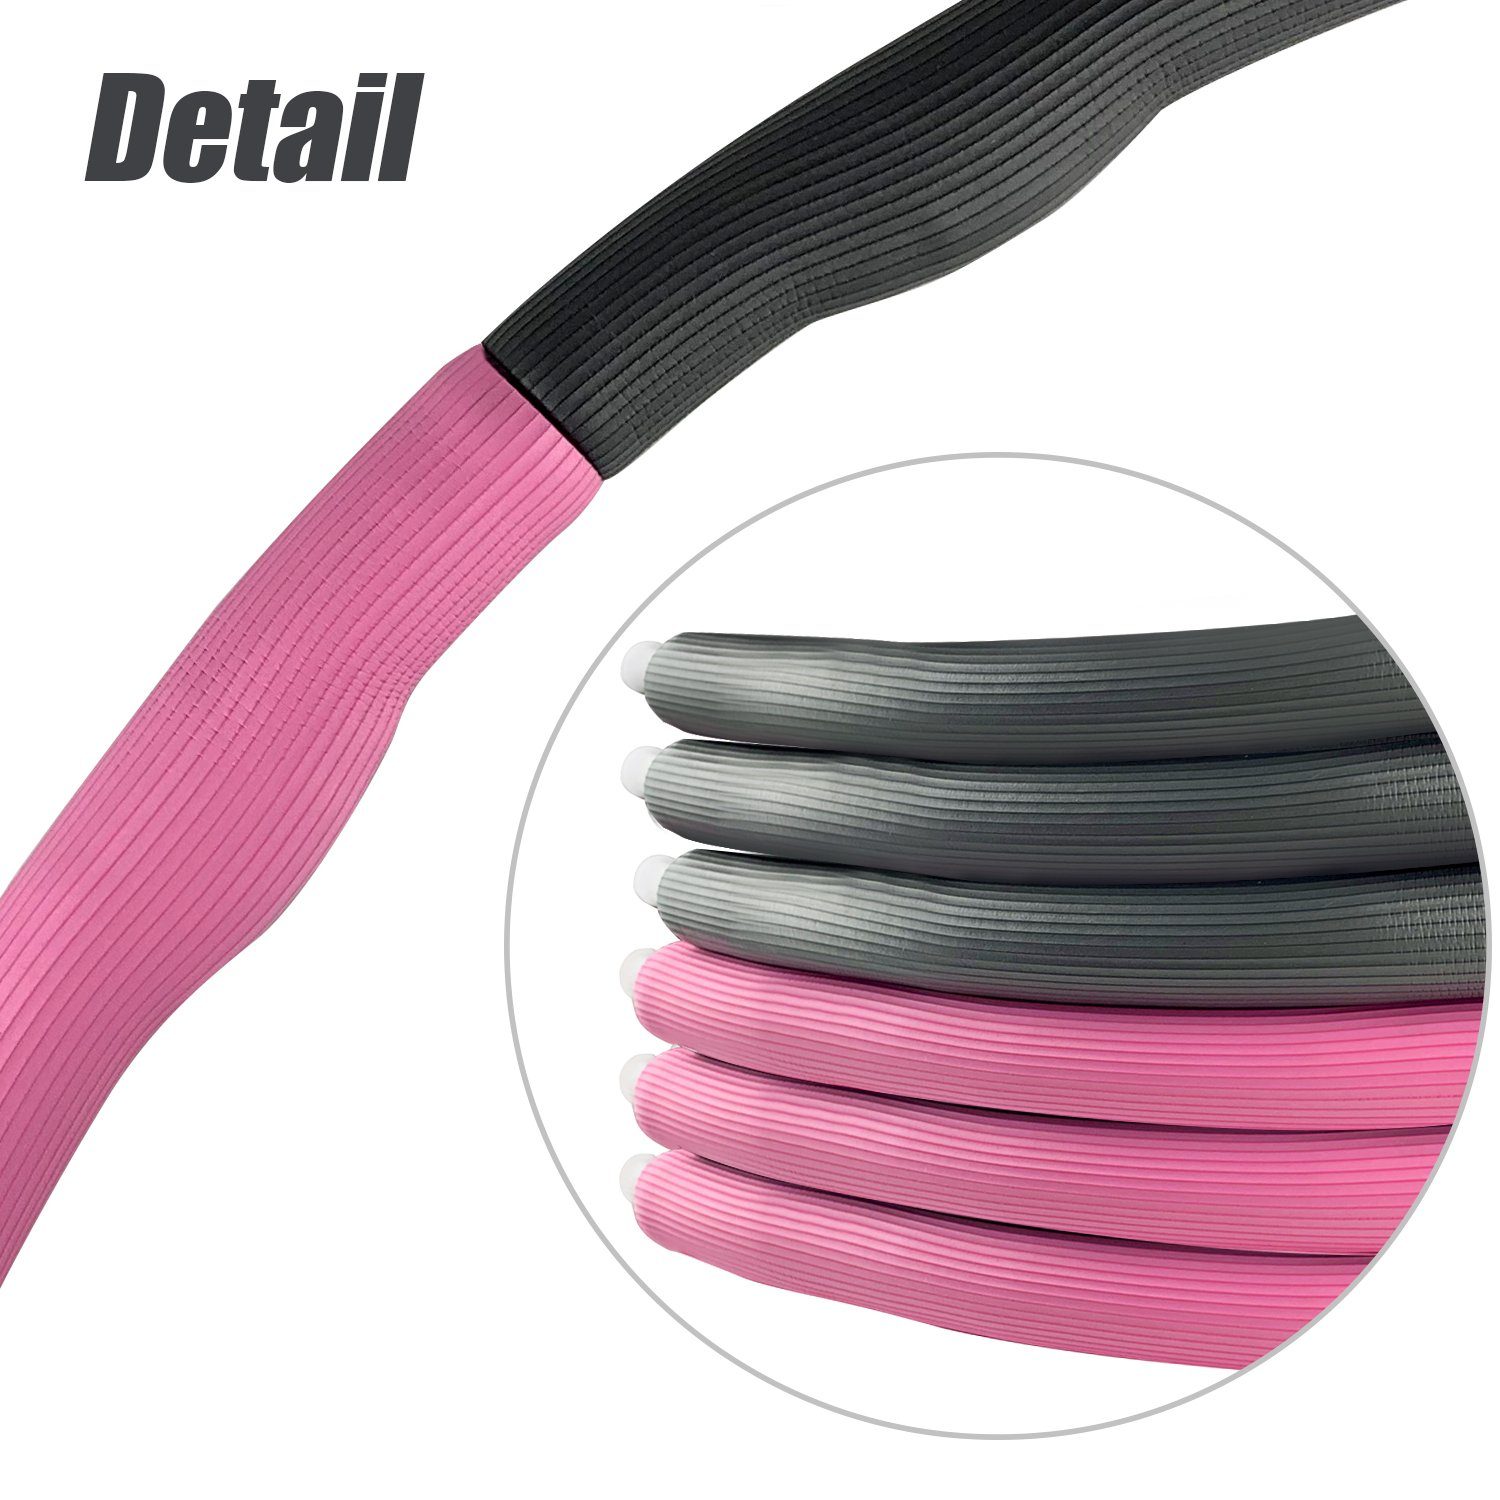 KIKAKO Hula-Hoop-Reifen Rosa 8 Hula-Fitness-Reifen grau Spleißen Wellenabschnitte Abnehmbar